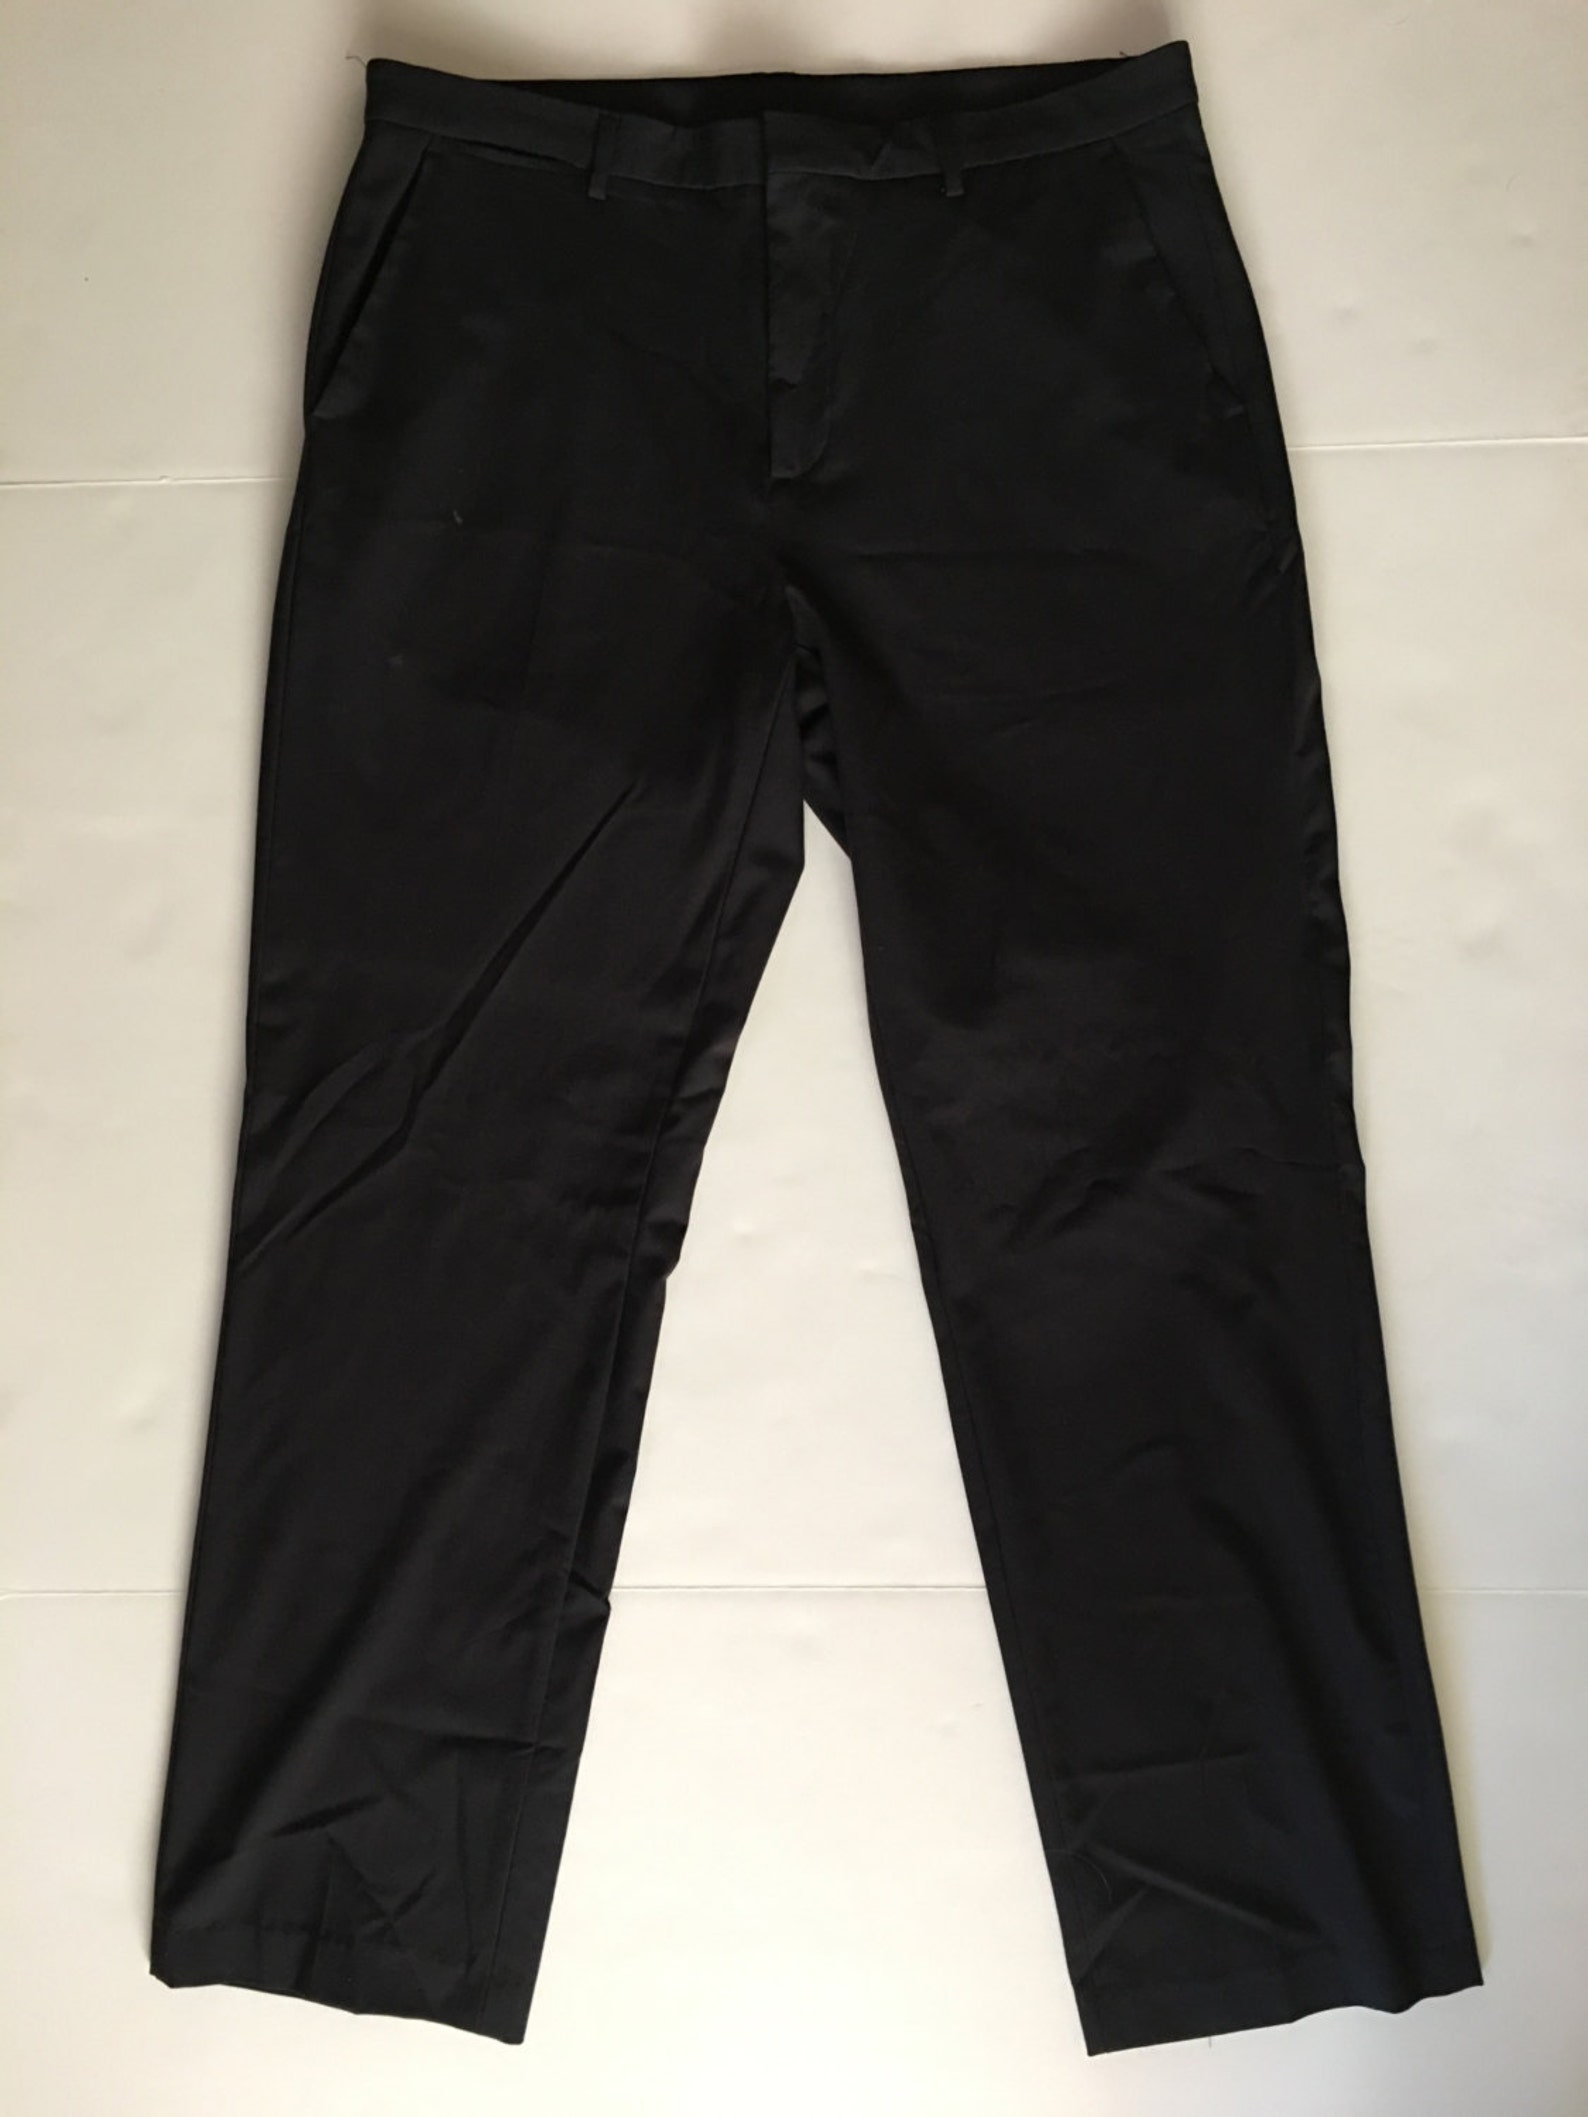 Calvin klein Men's Black Pants Size 34/32 Reg Made in | Etsy